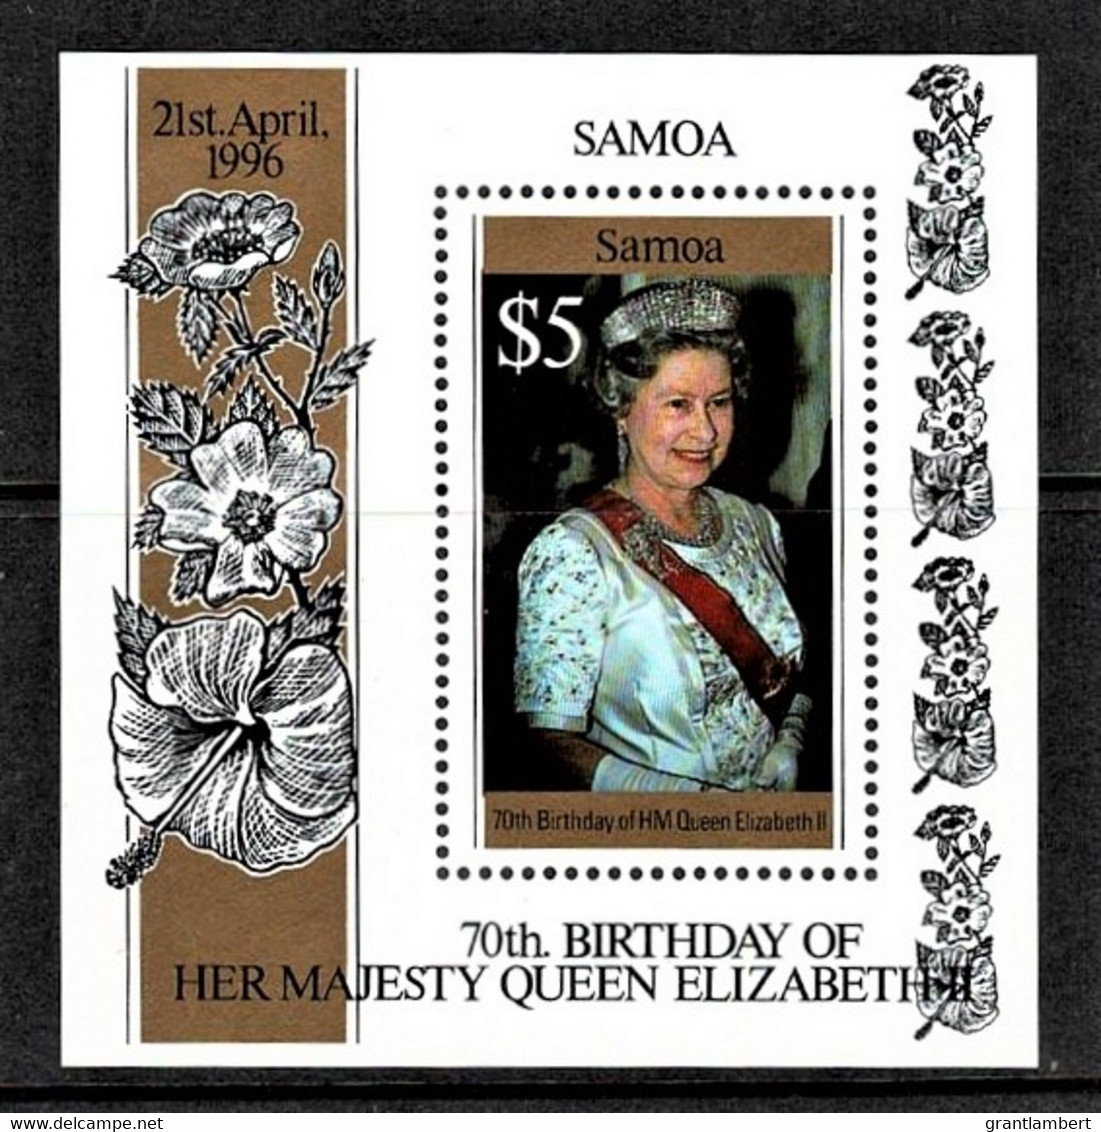 Samoa 1996 Queen Elizabeth 70th Birthday $5 Minisheet MNH - Samoa